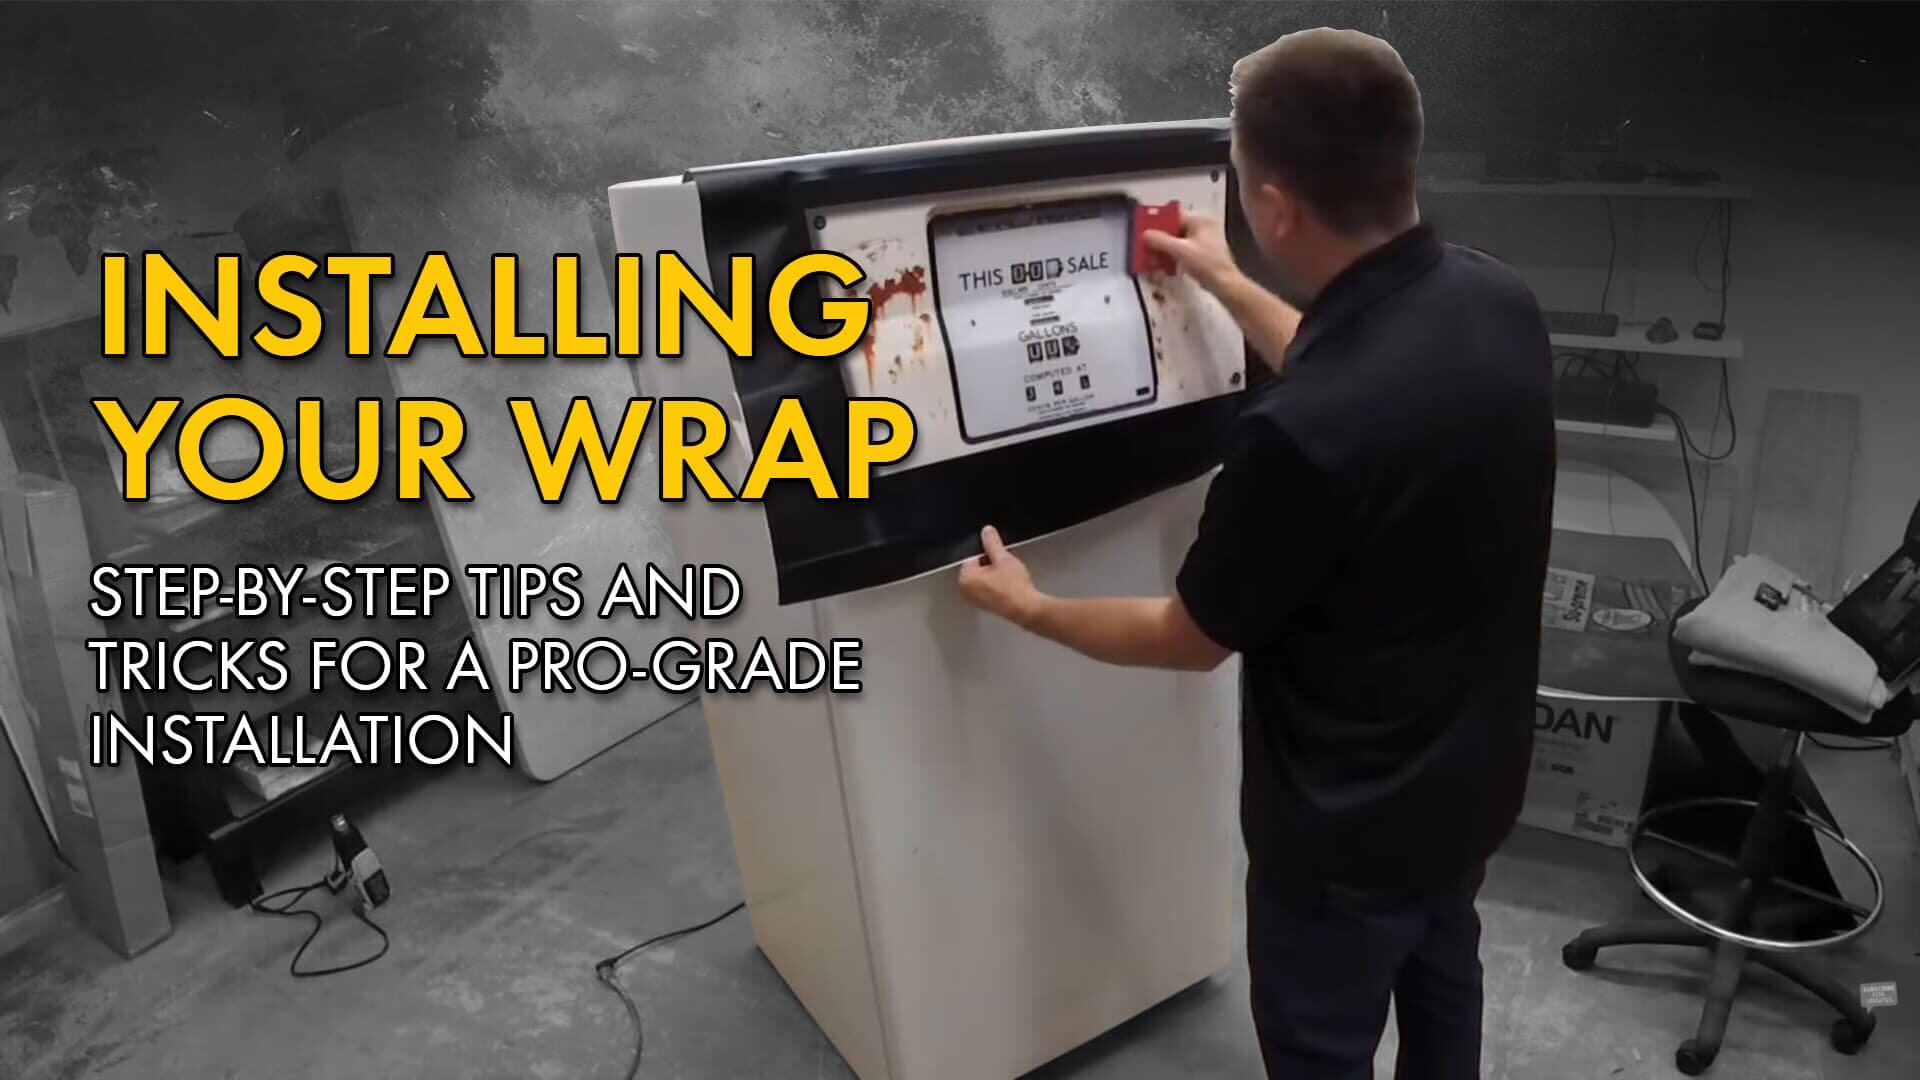 Chest Freezer Wraps — Rm wraps makes custom printed wraps for the